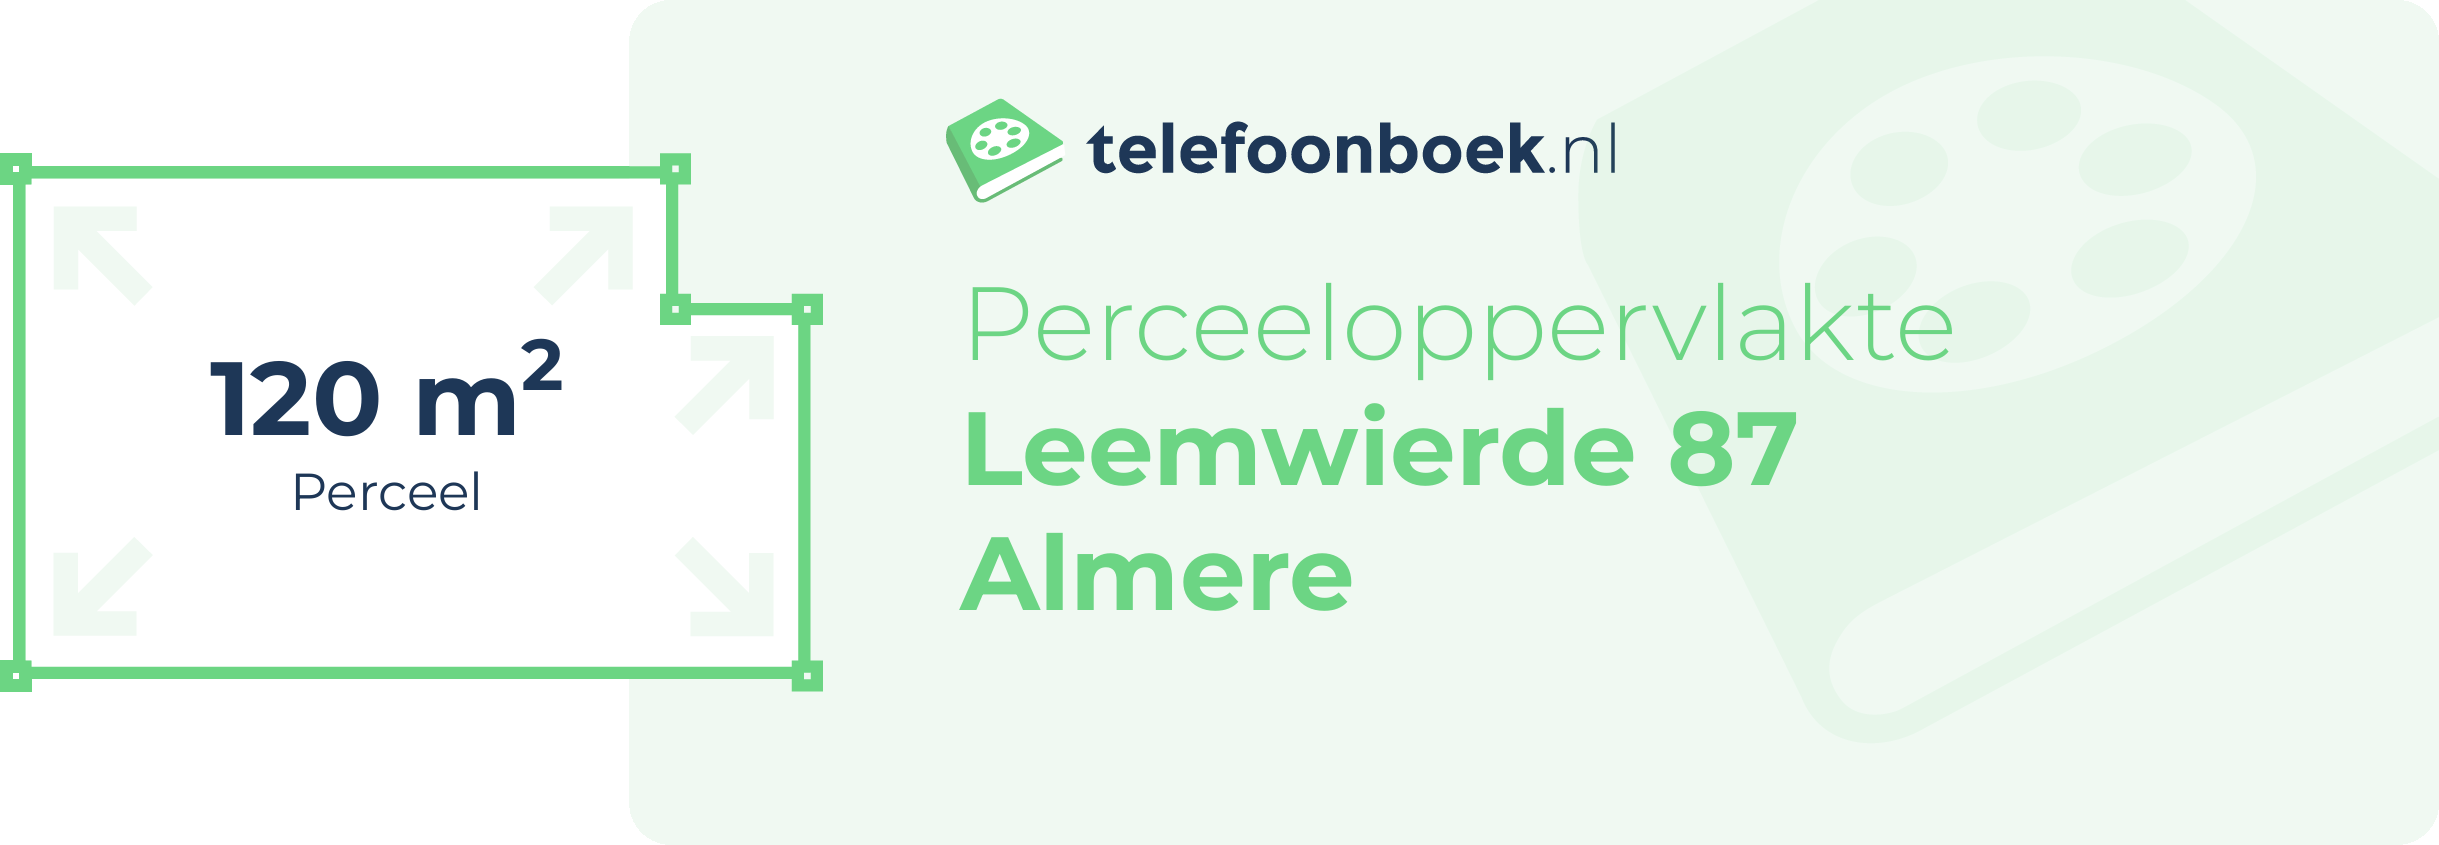 Perceeloppervlakte Leemwierde 87 Almere